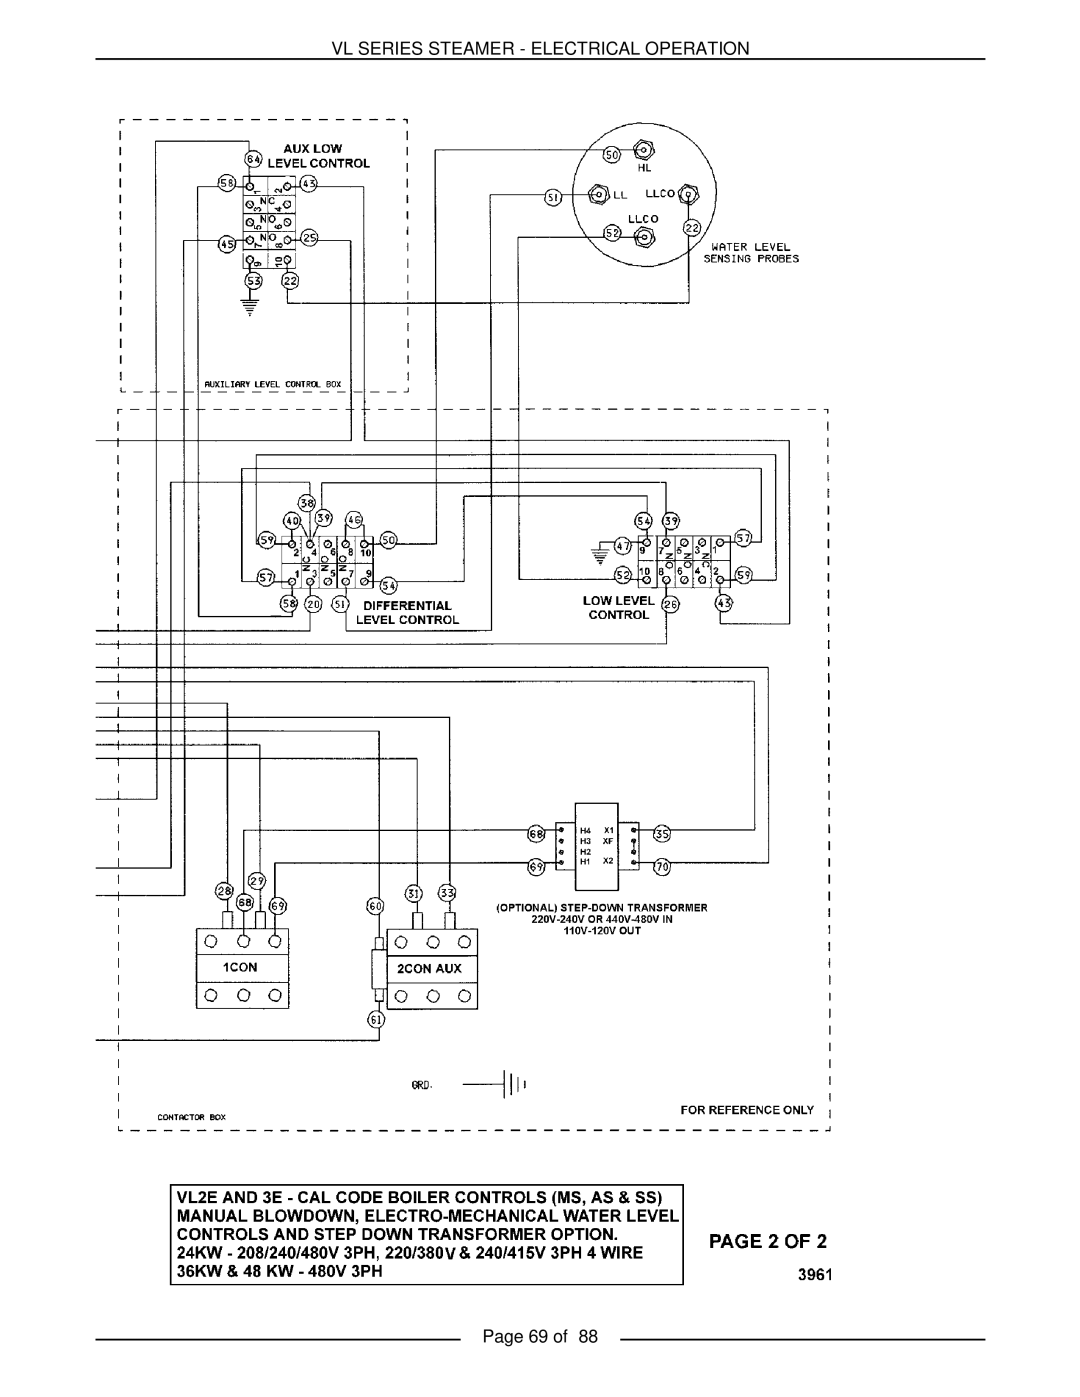 Vulcan-Hart VL3GSS, VL3GMS, VL2GMS, VL3GAS, VL2GAS, VL2GSS, VL3GPS, VL2GPS Vl Series Steamer - Electrical Operation, Page 69 of 